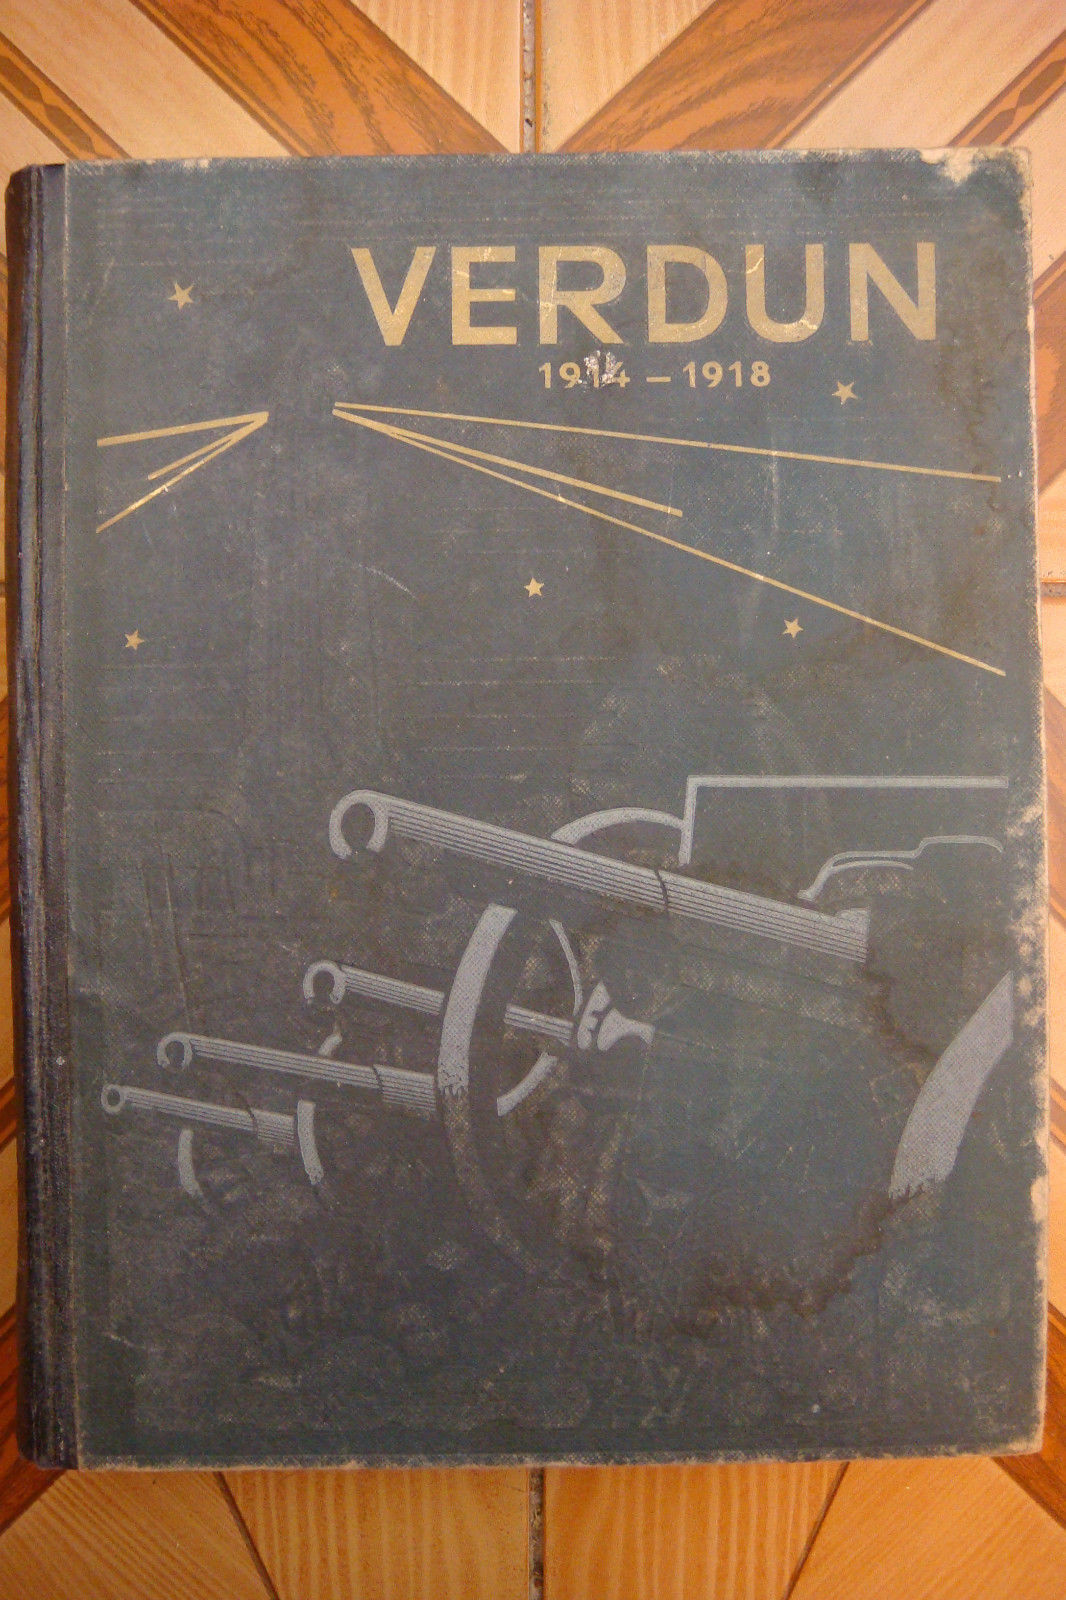 RARE BOOK OF WWI Verdun 1914-1918 BY JACQUES PERICARD 1936 FRANCE PARIS